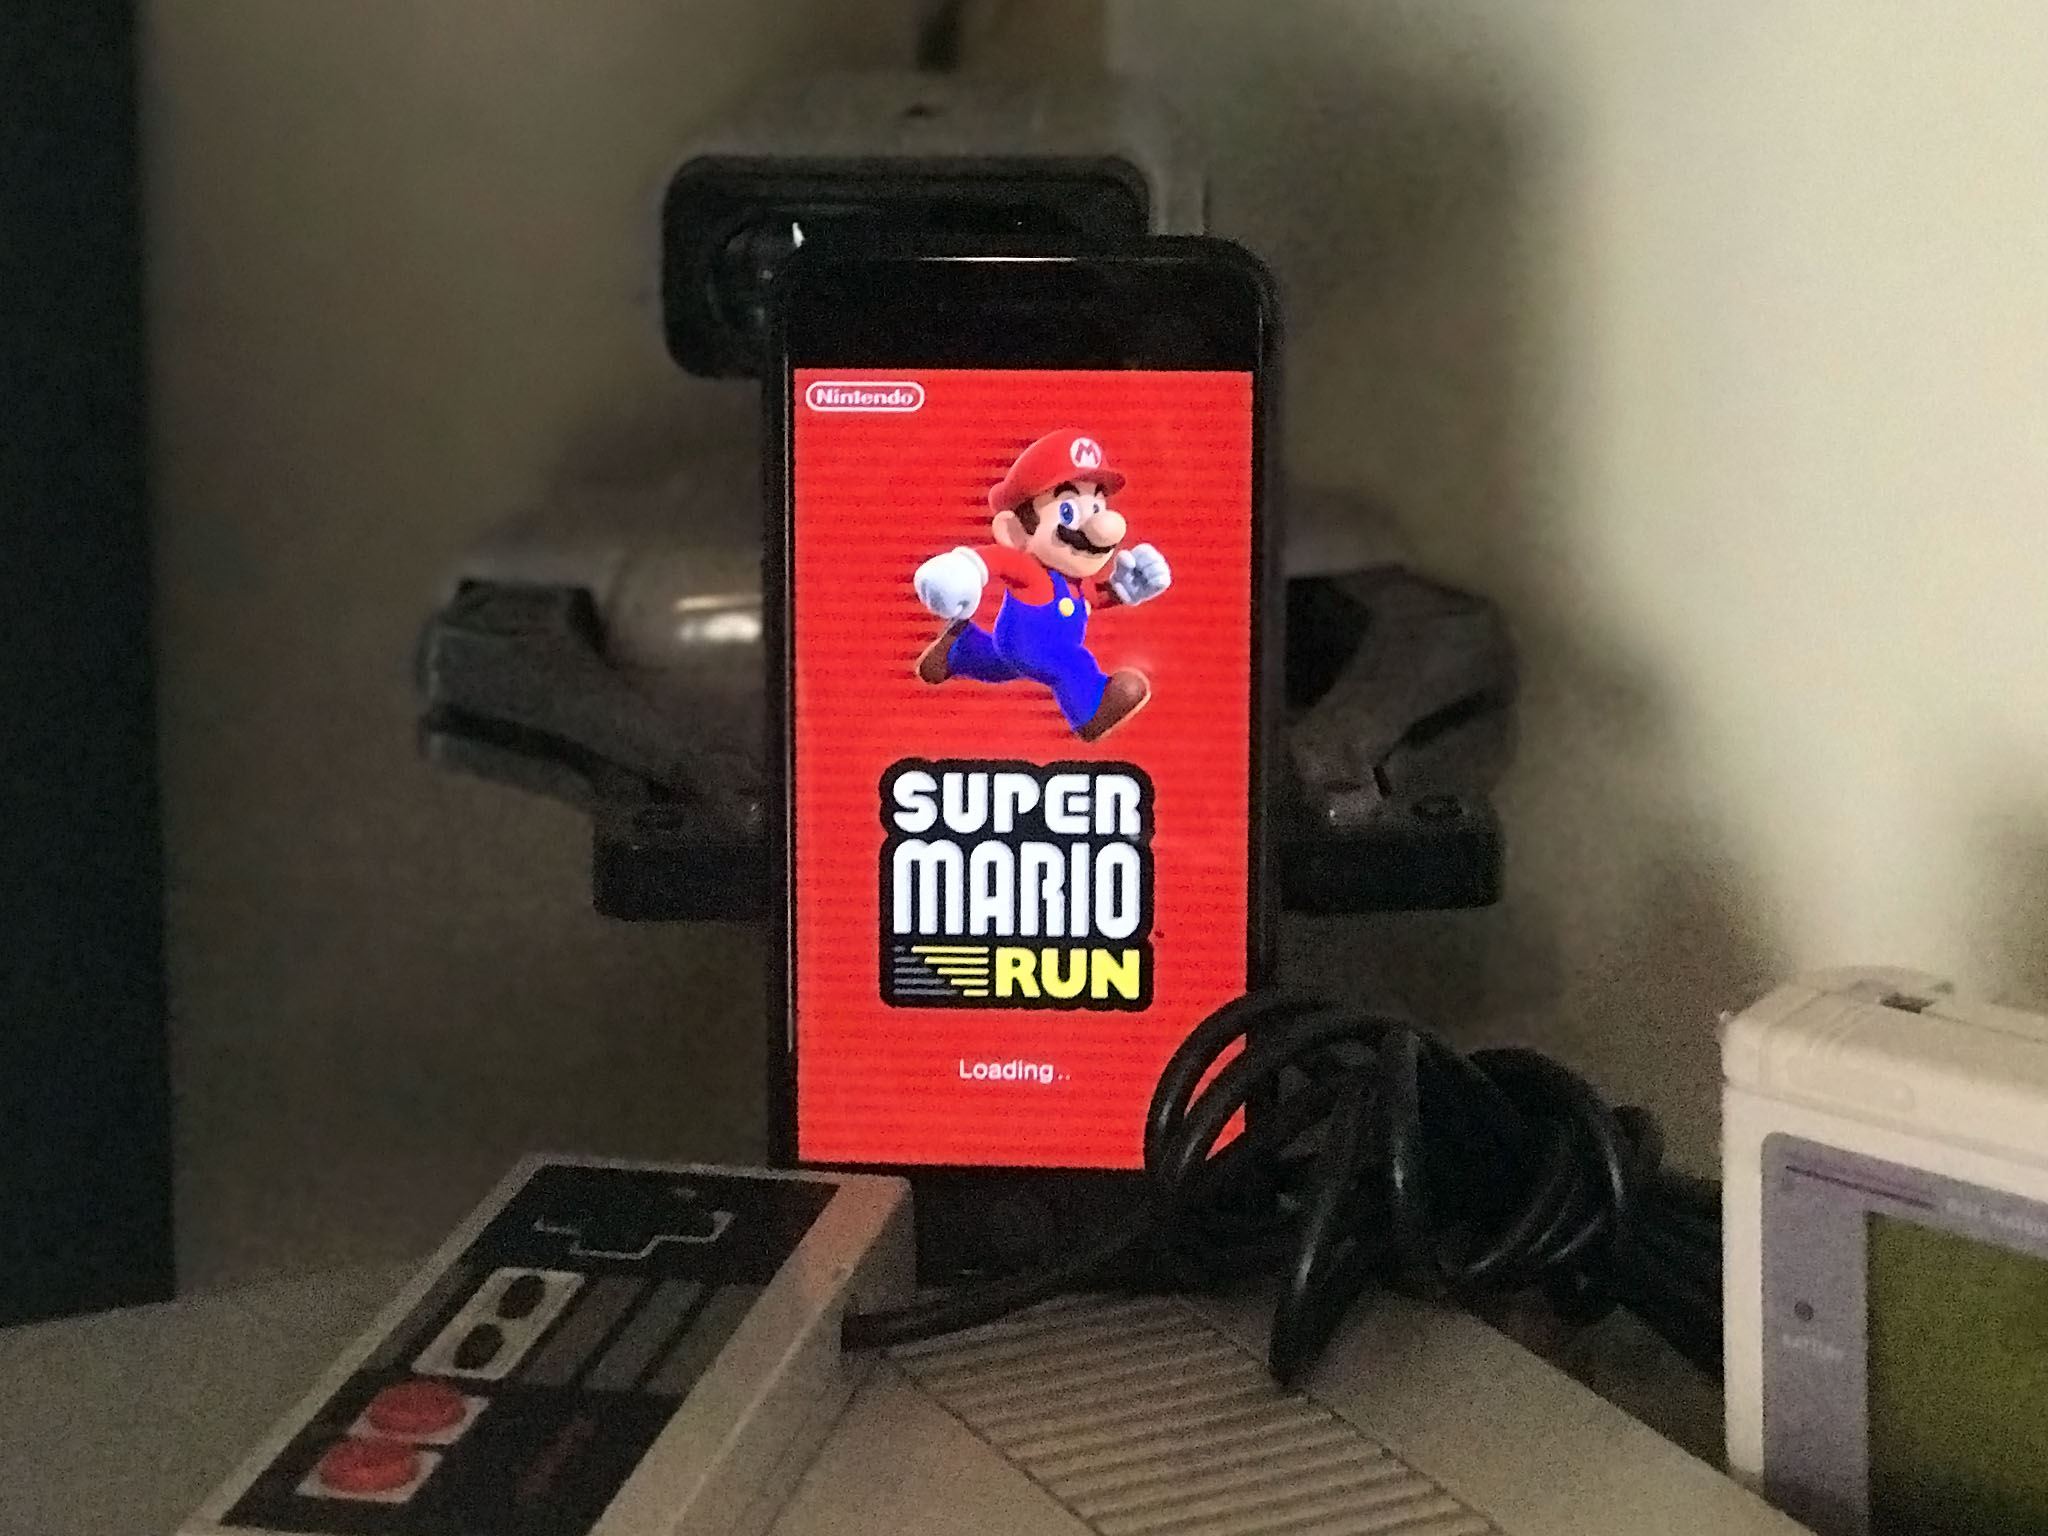 How to Play Super Mario Run PC?